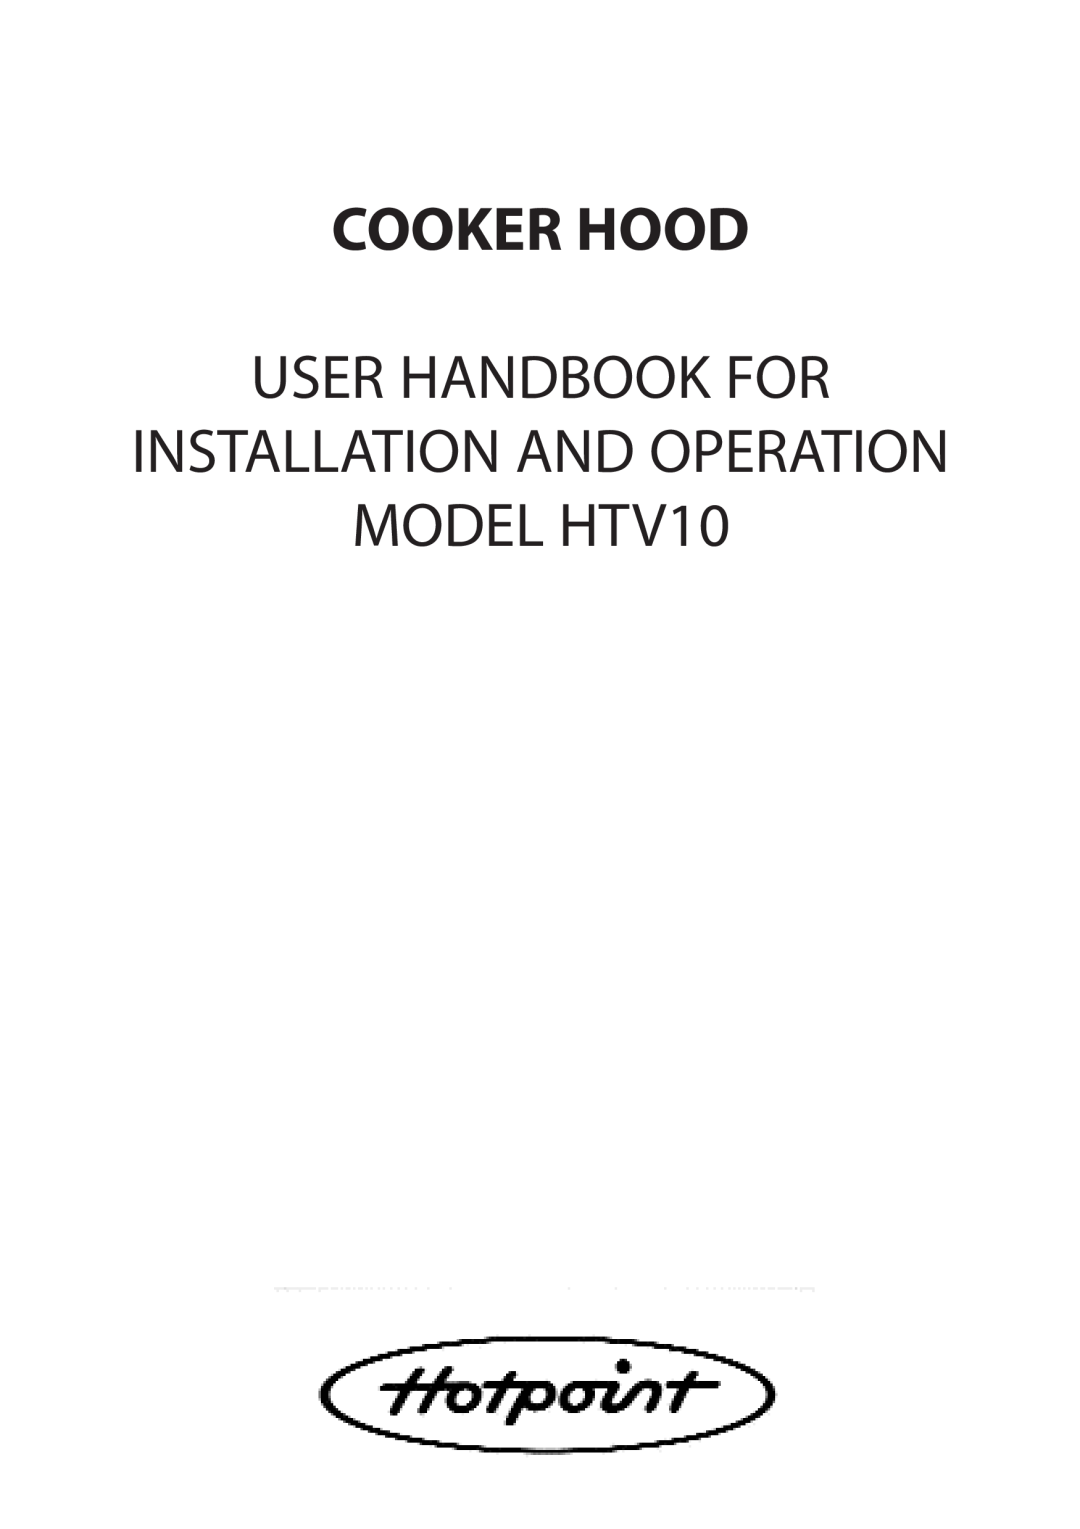 Hotpoint manual Cooker Hood, User Handbook For, MODEL HTV10, Installation And Operation 